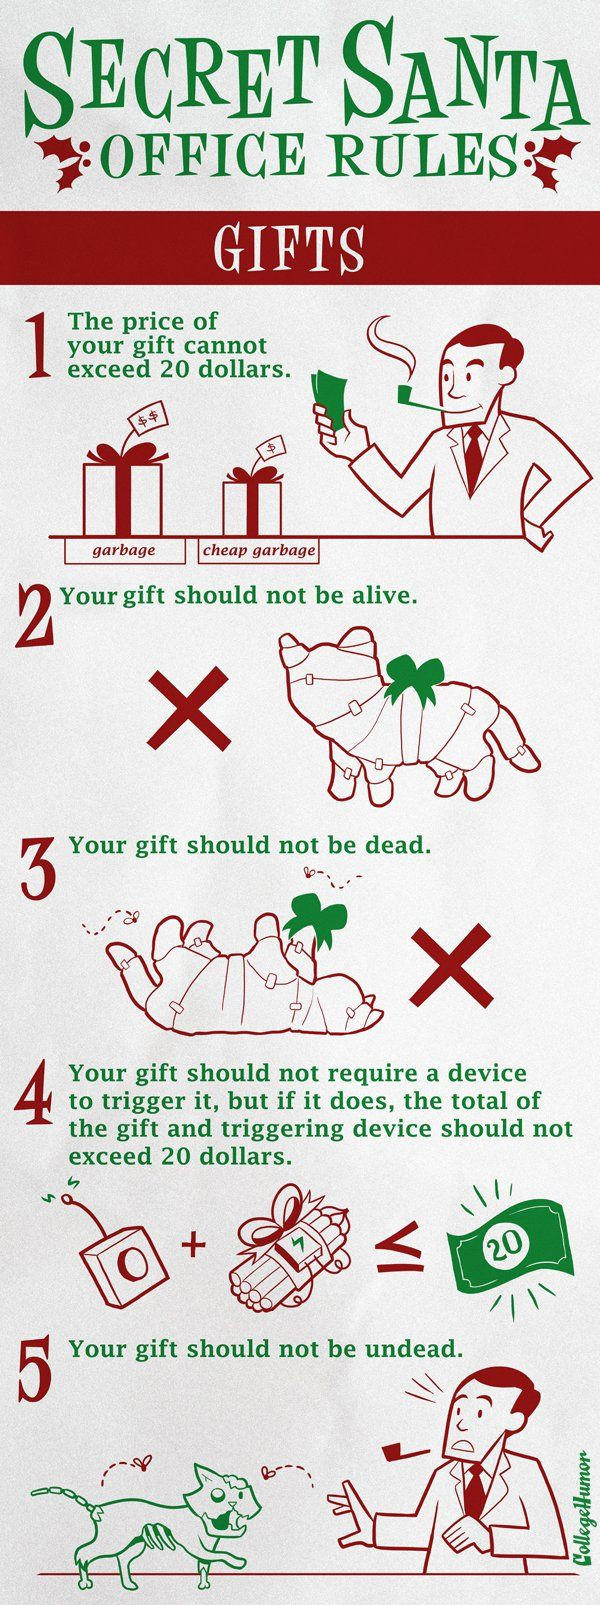 Best ideas about Funny Secret Santa Gift Ideas
. Save or Pin The 25 best Secret santa ts ideas on Pinterest Now.